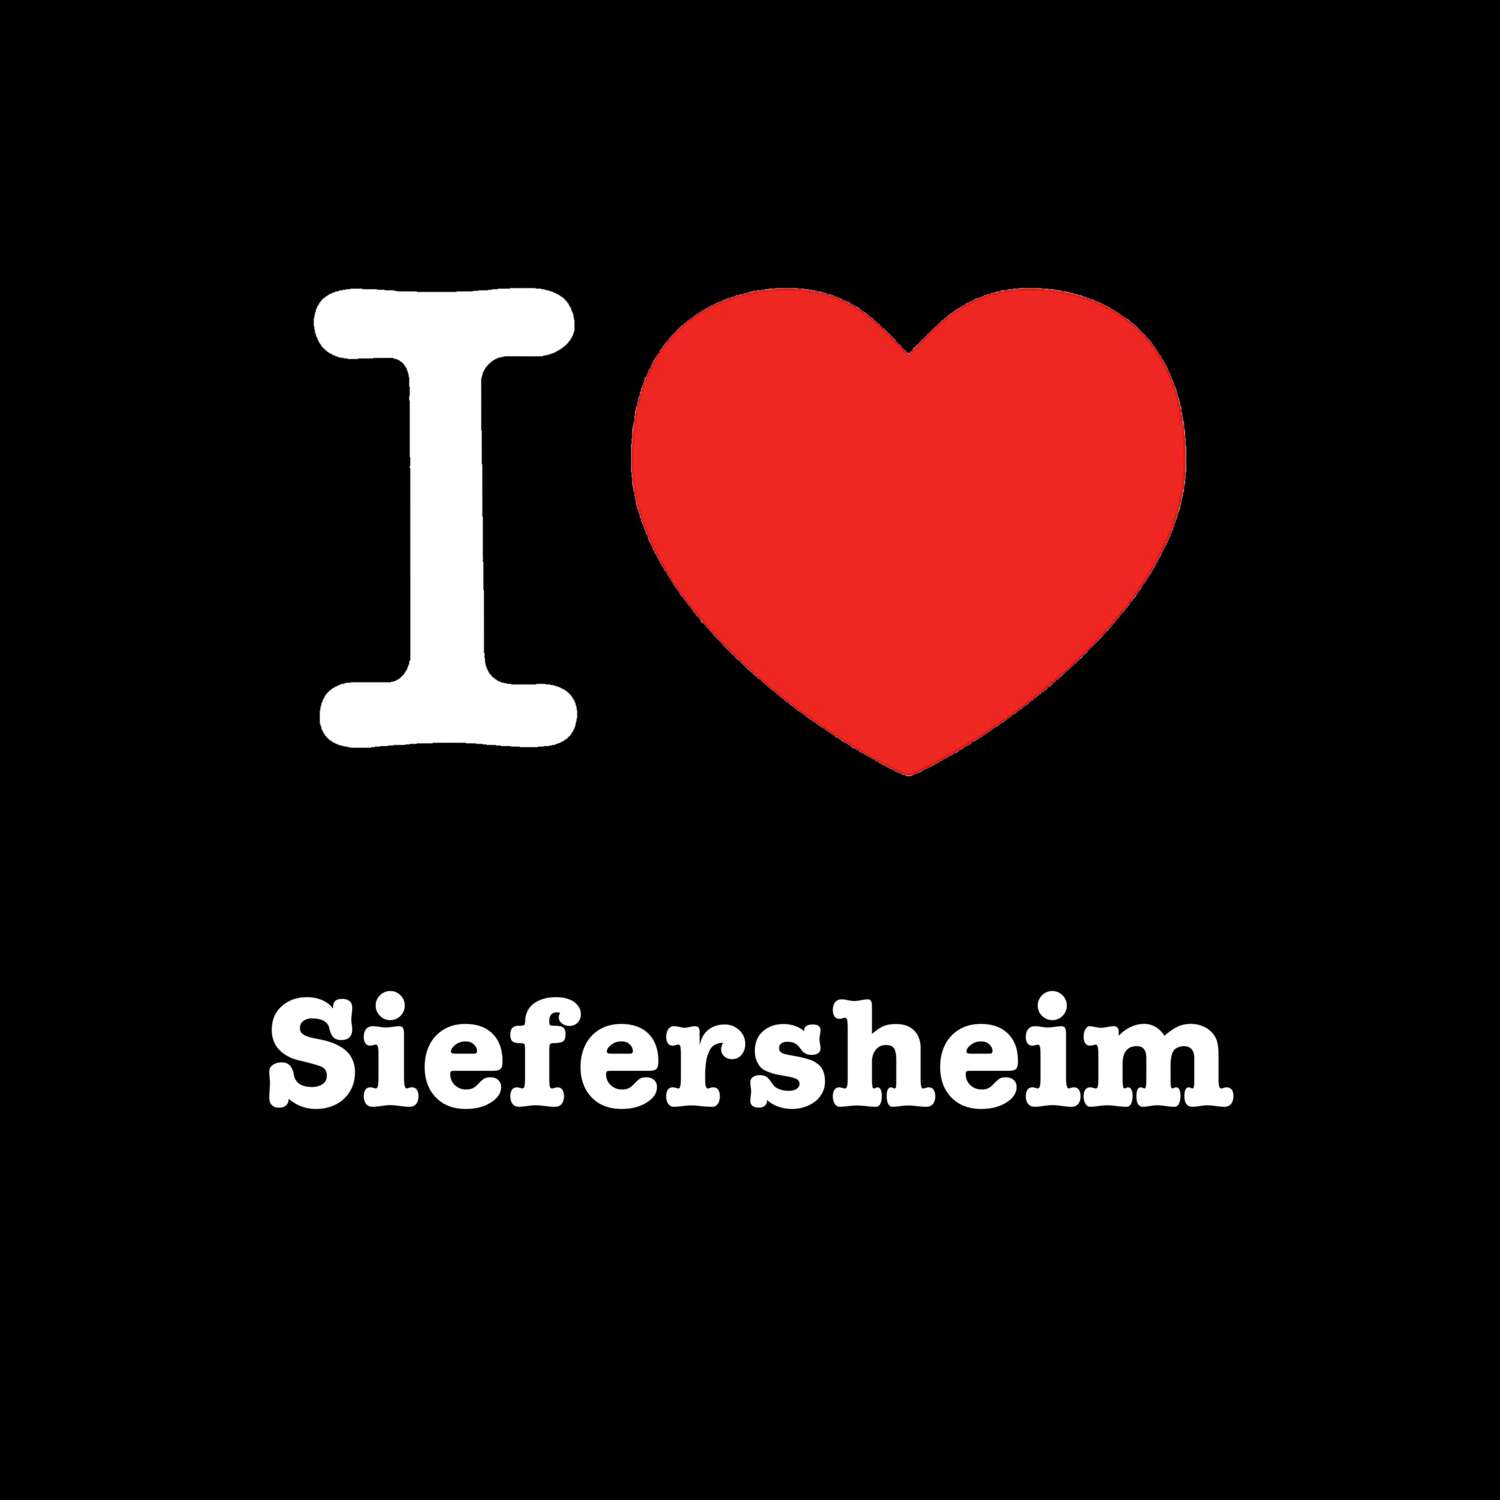 Siefersheim T-Shirt »I love«